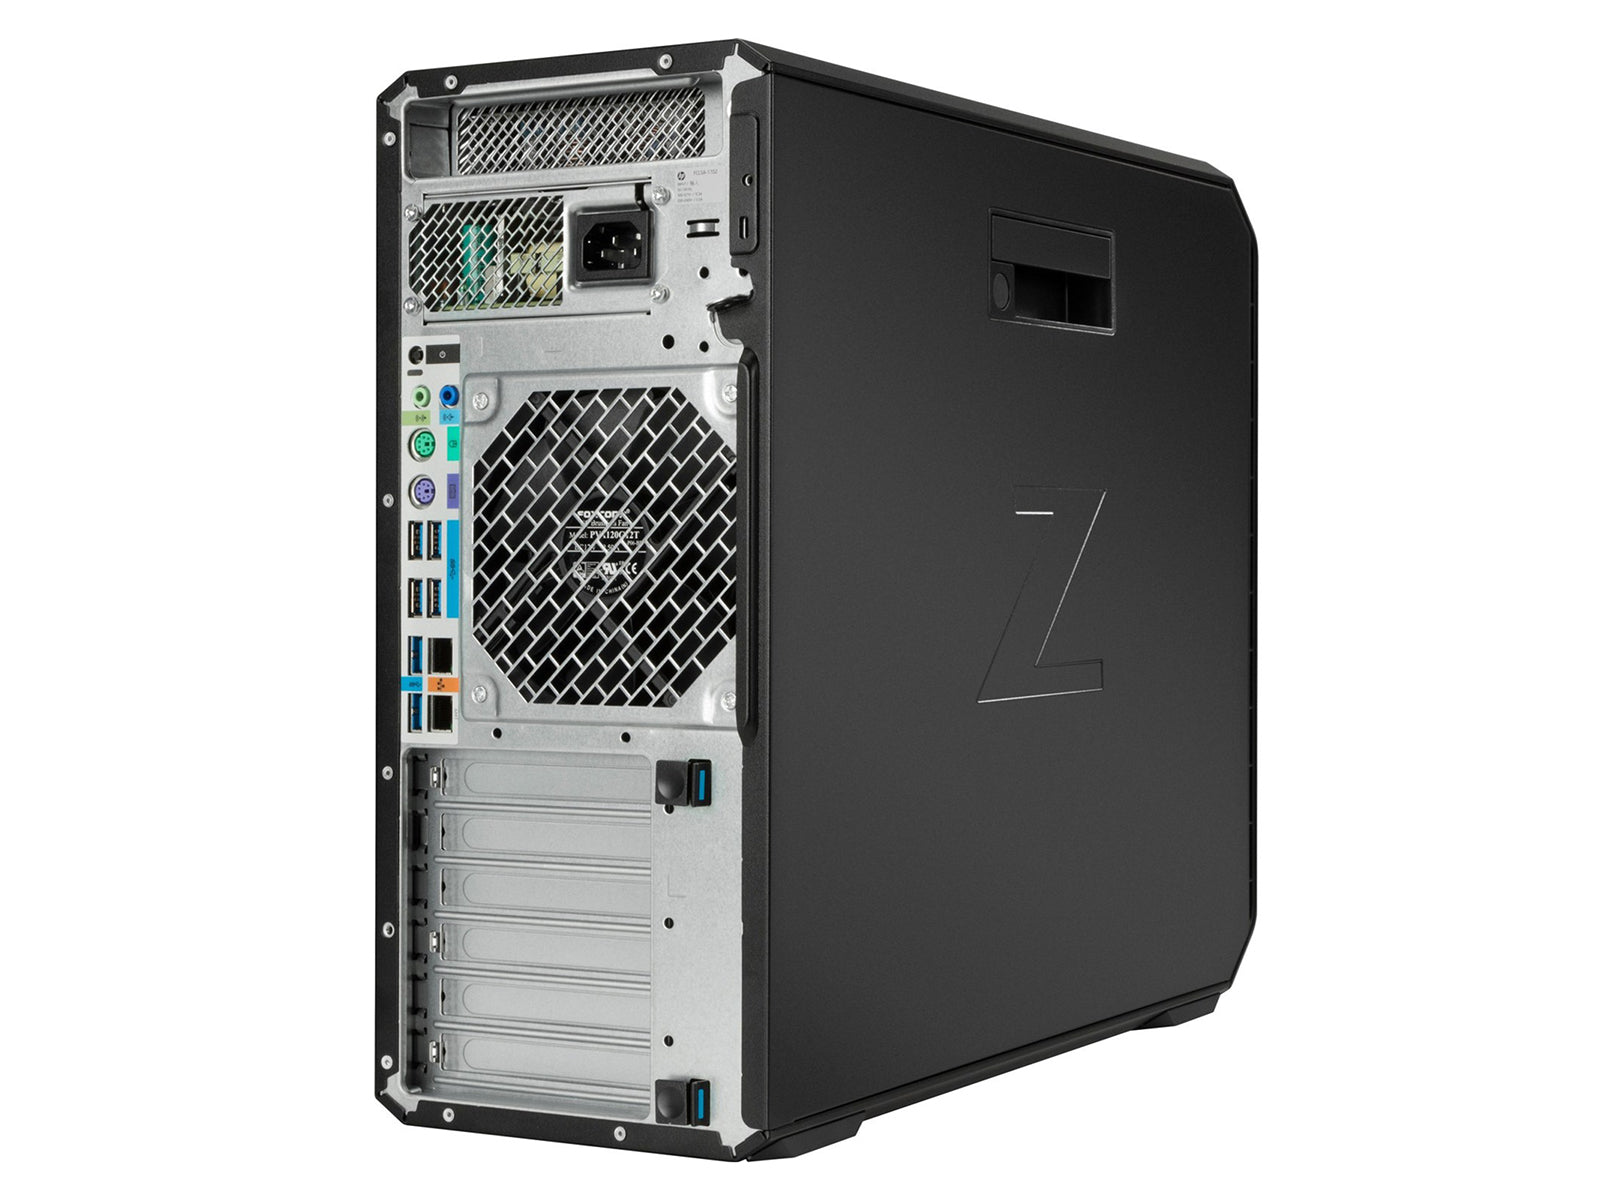 HP Z4 G4 Workstation | Intel Xeon W-2175 @ 4.30GHz | 14-Core | 128GB ECC DDR4 | 1TB SSD | AMD WX 7100 | Win10 Pro Monitors.com 